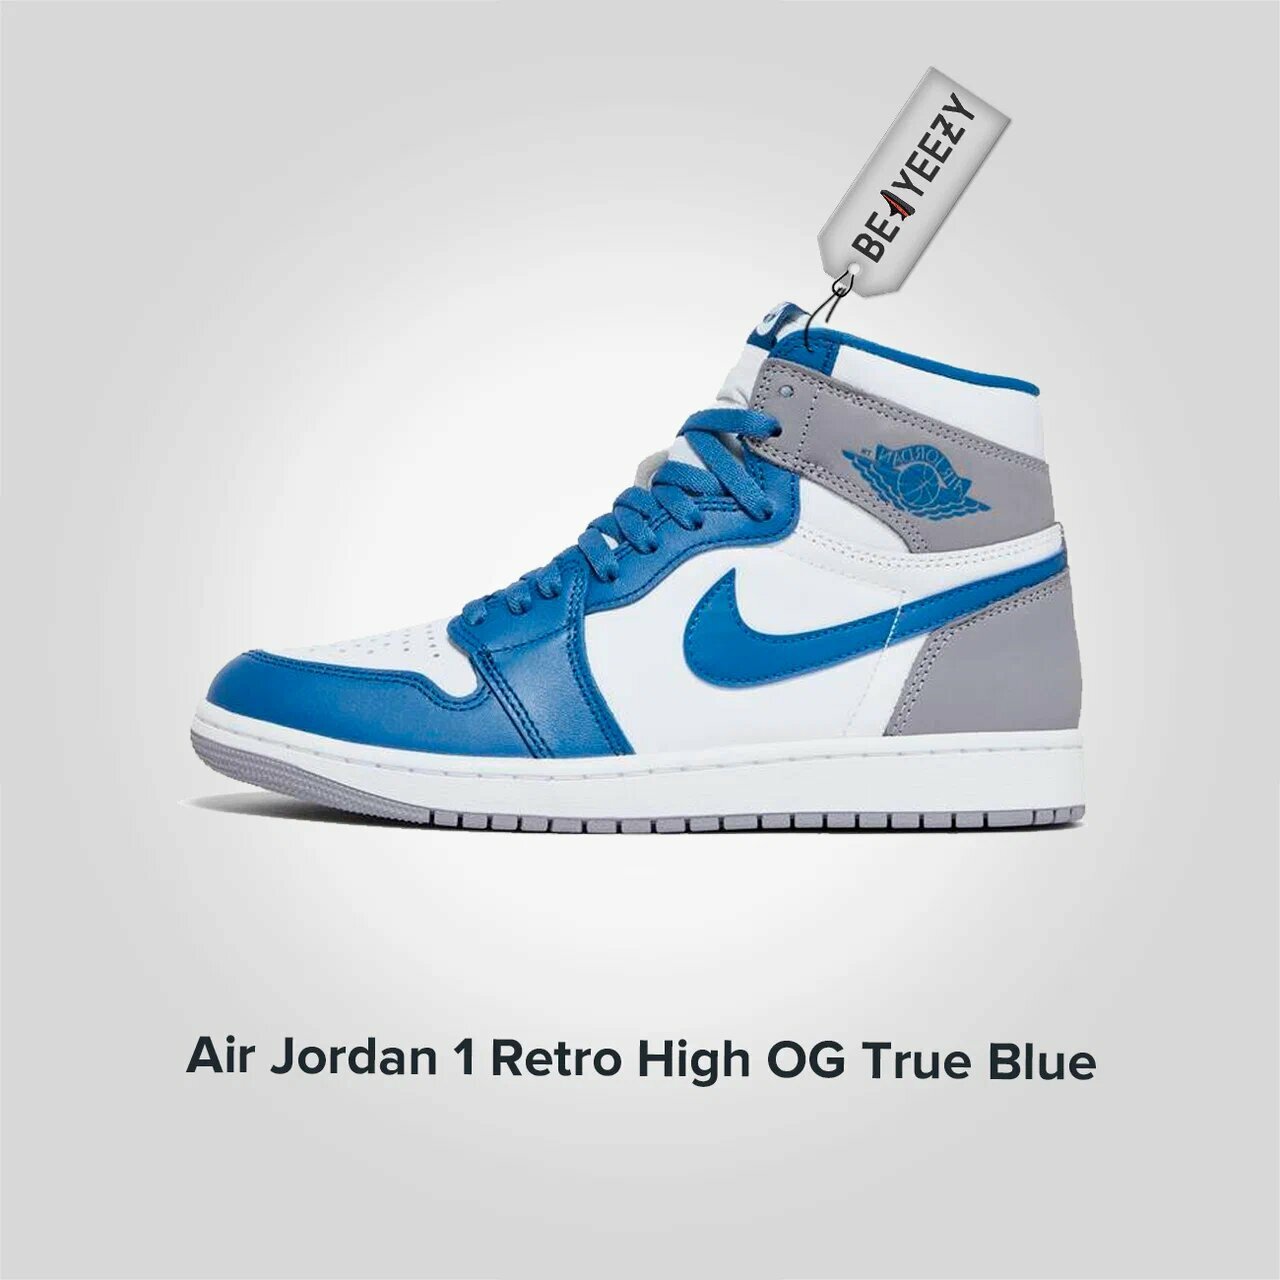 Jordan 1 Retro High OG True Blue